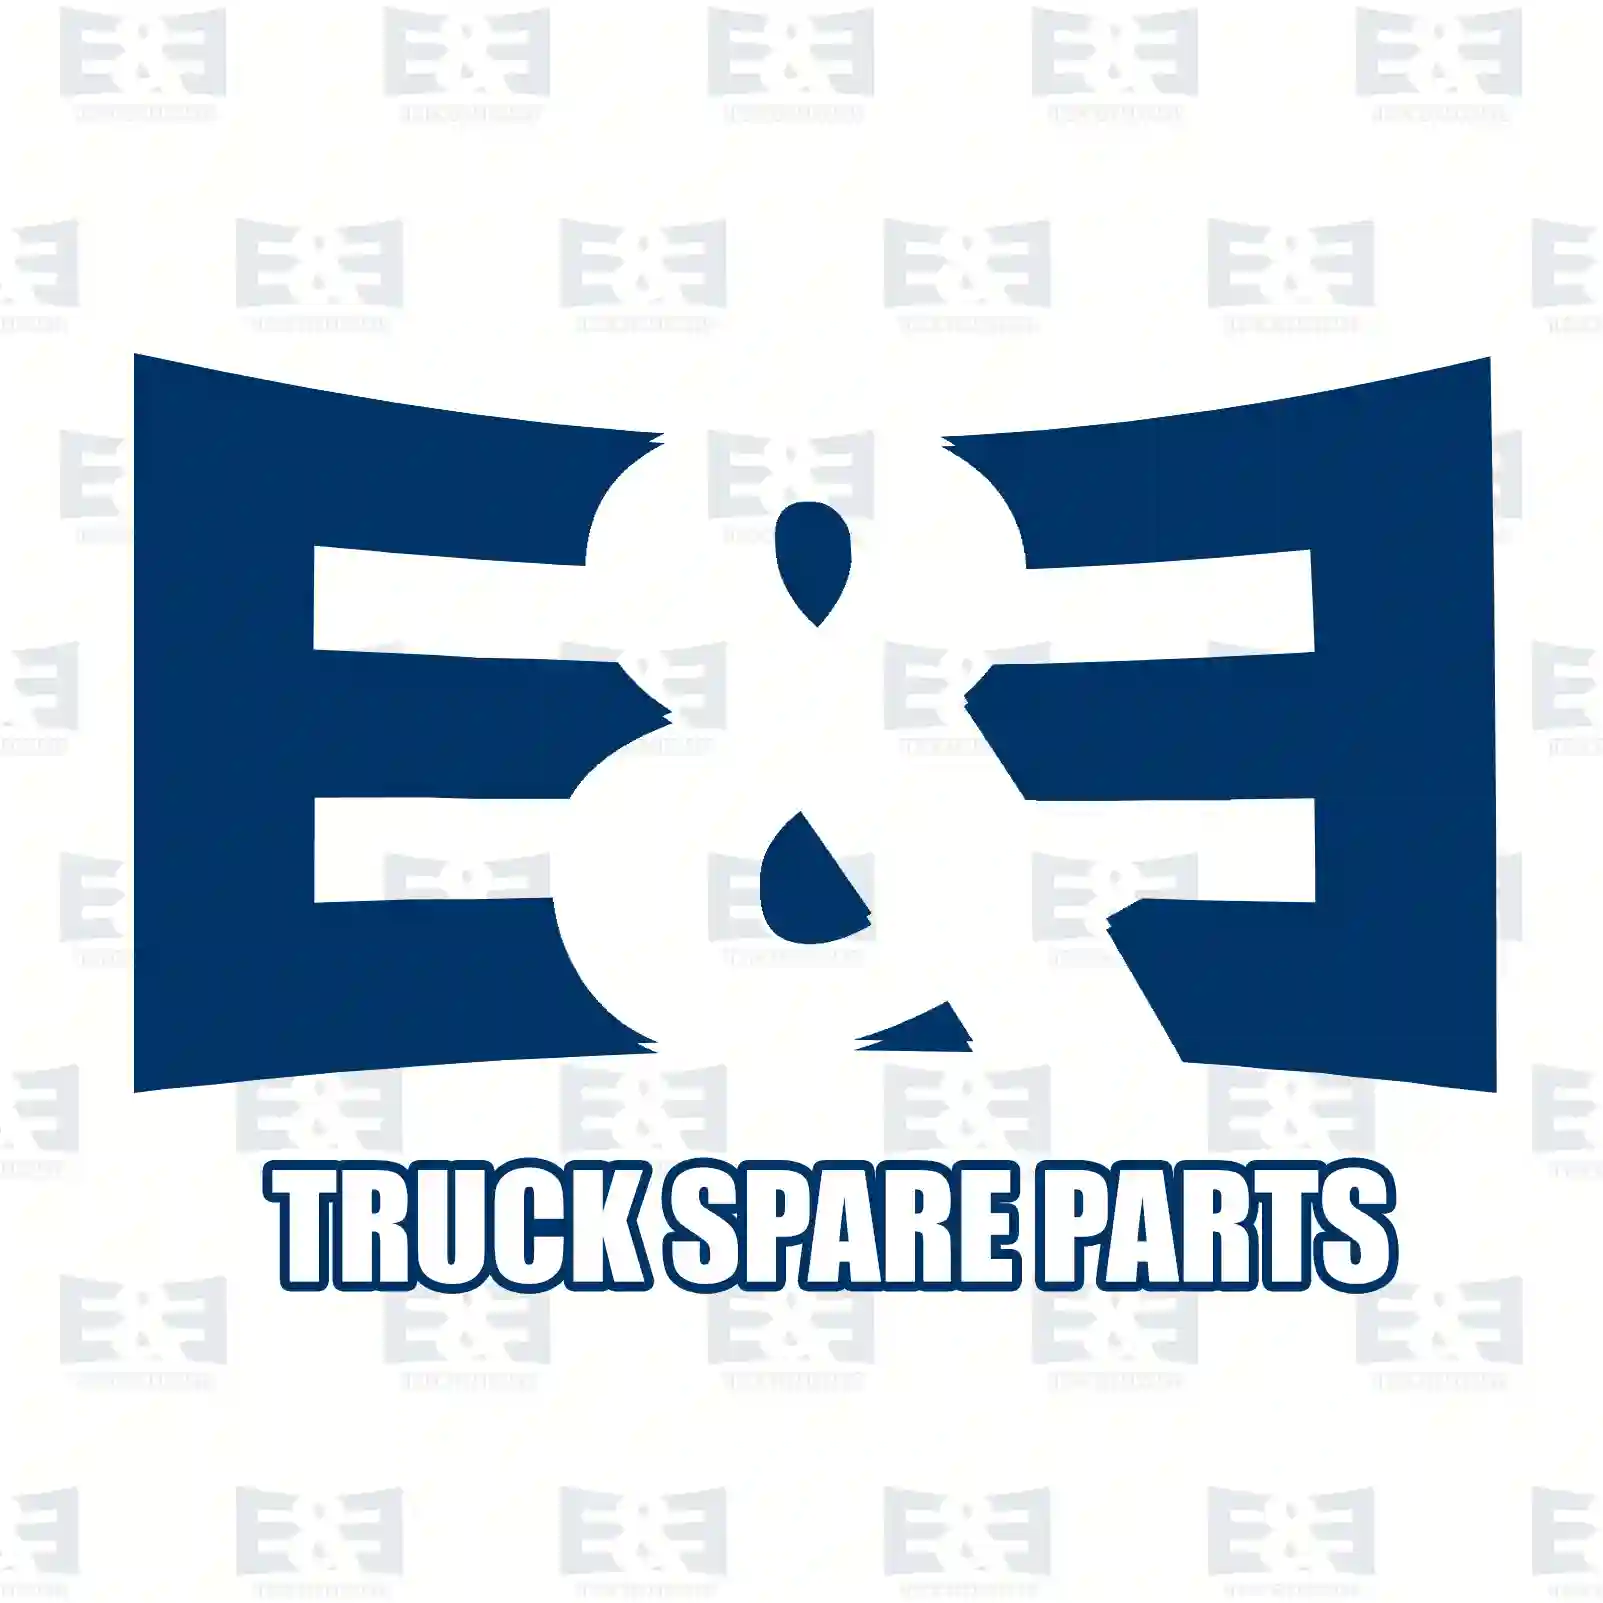  Repair kit, outer planetary gear || E&E Truck Spare Parts | Truck Spare Parts, Auotomotive Spare Parts